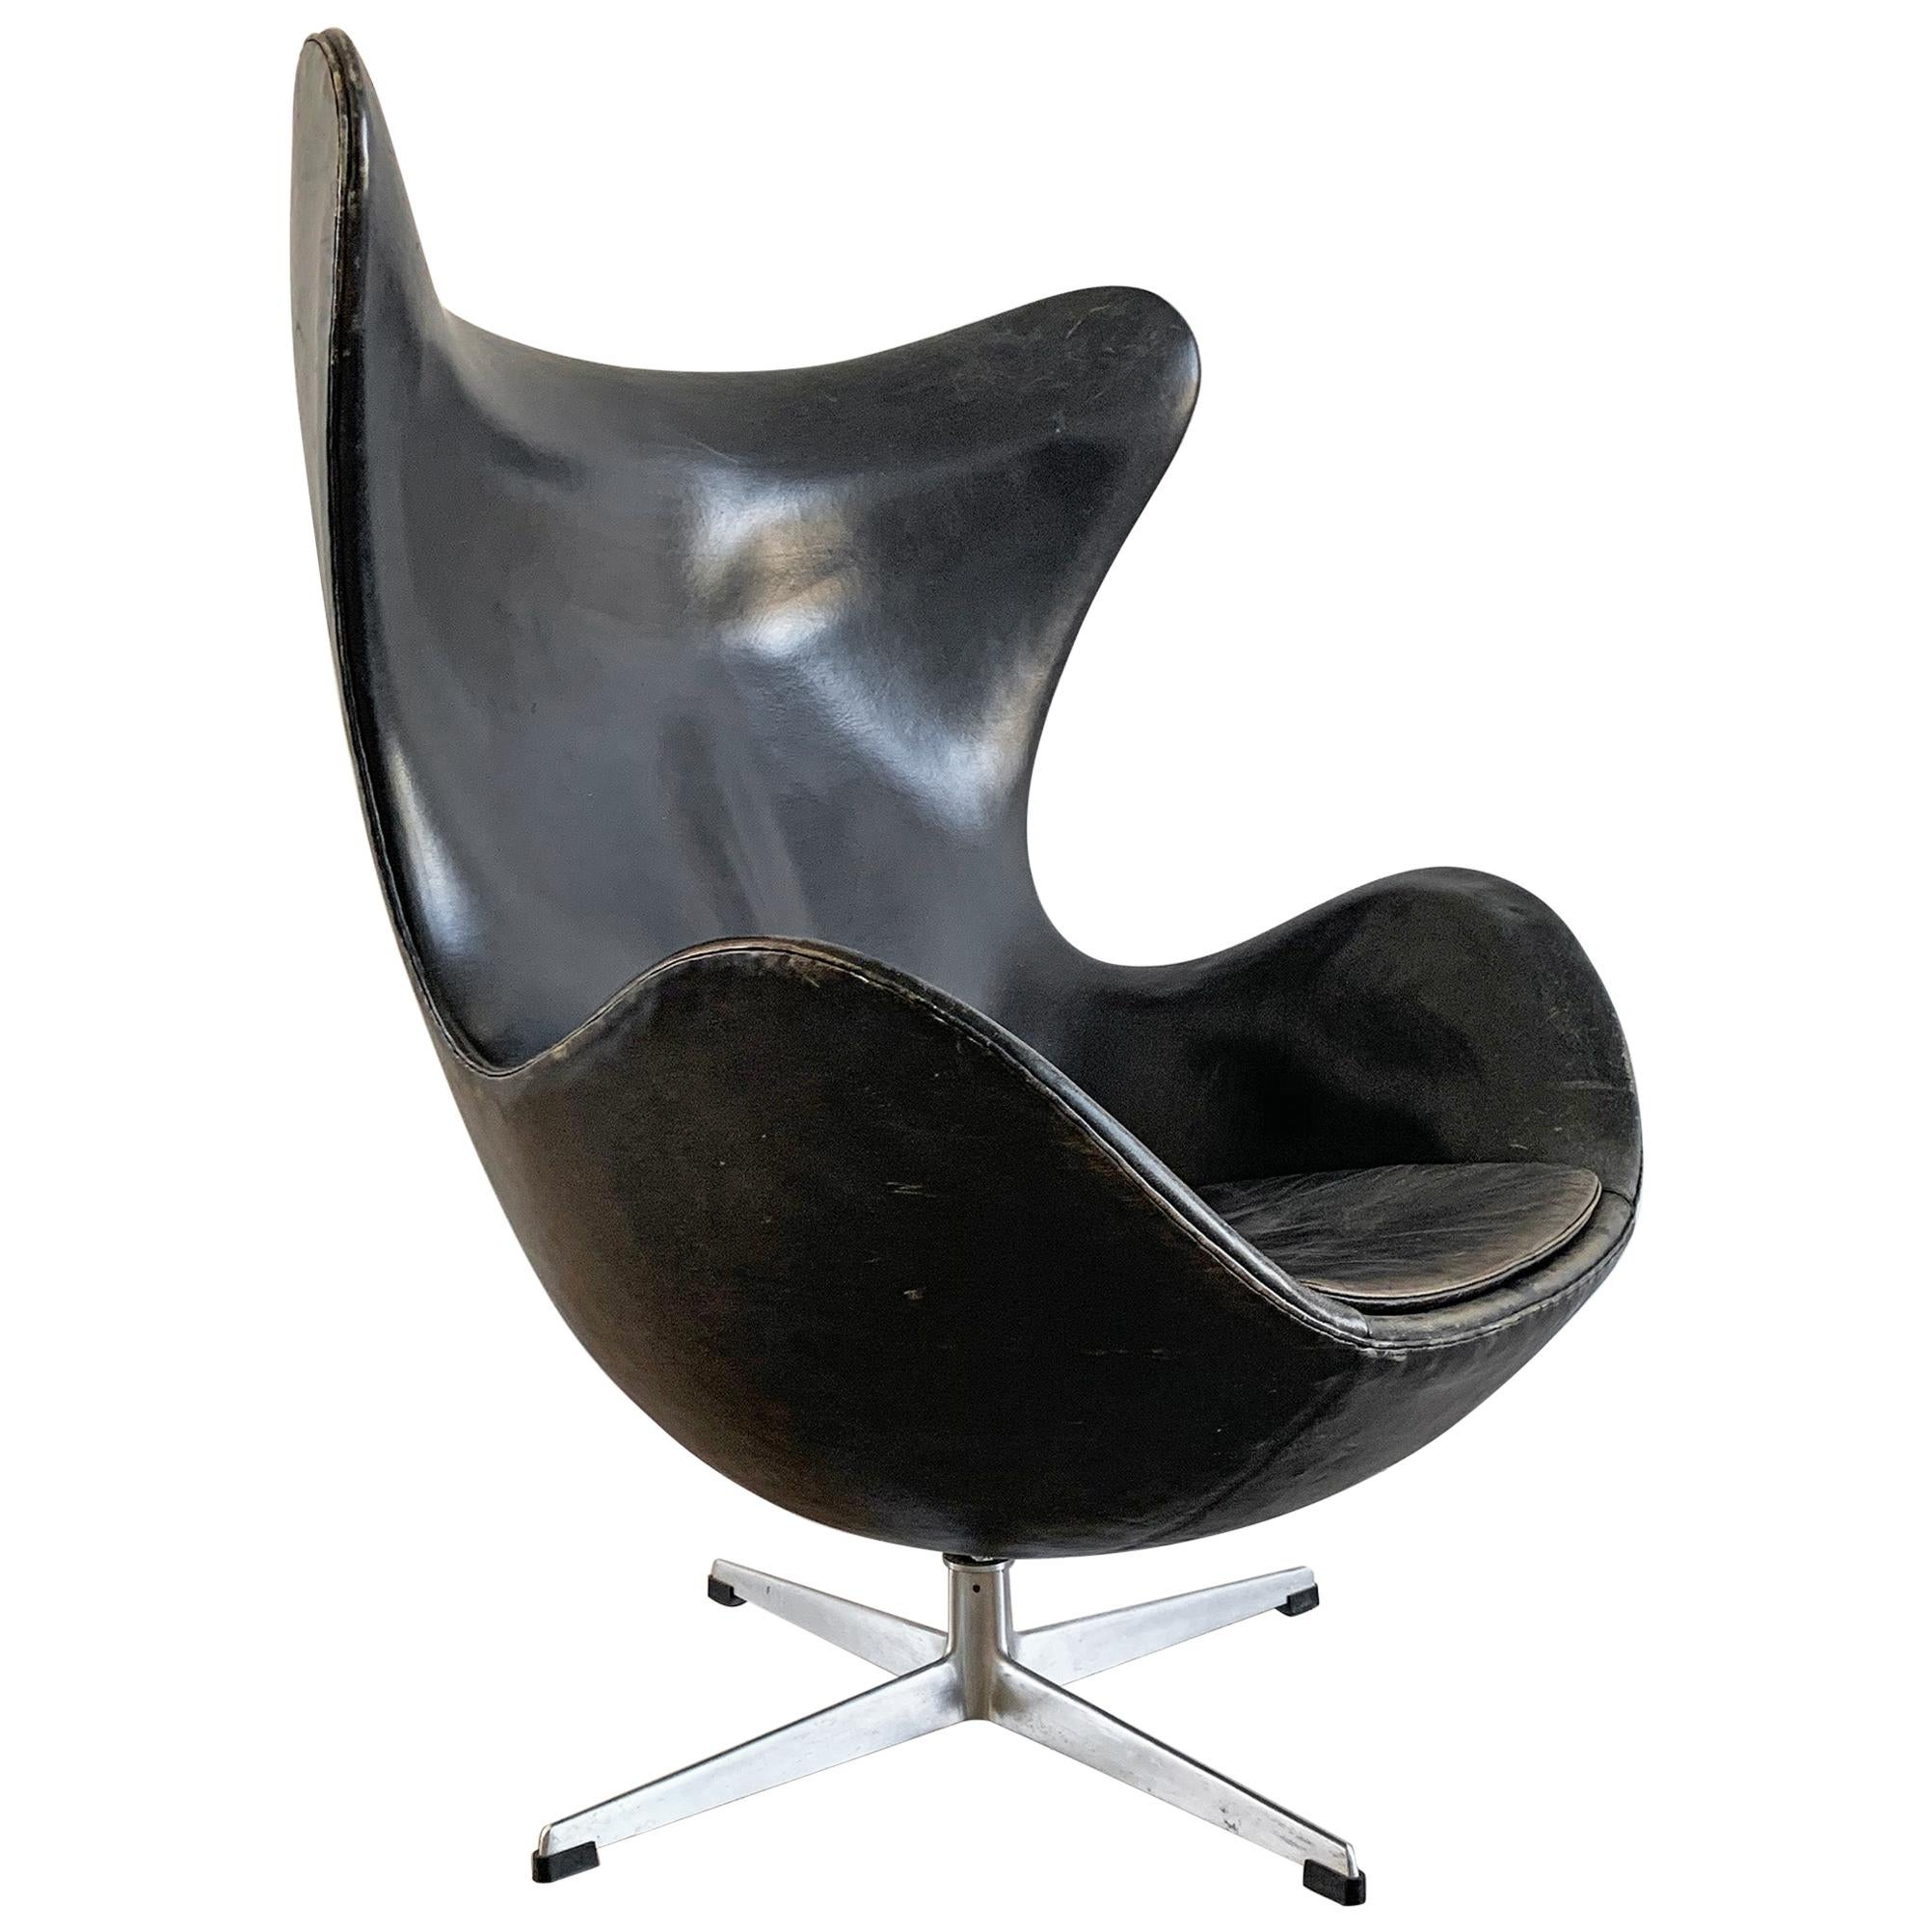 Arne Jacobsen for Fritz Hansen Patinated Black Leather Egg Chair,  Signed 1963